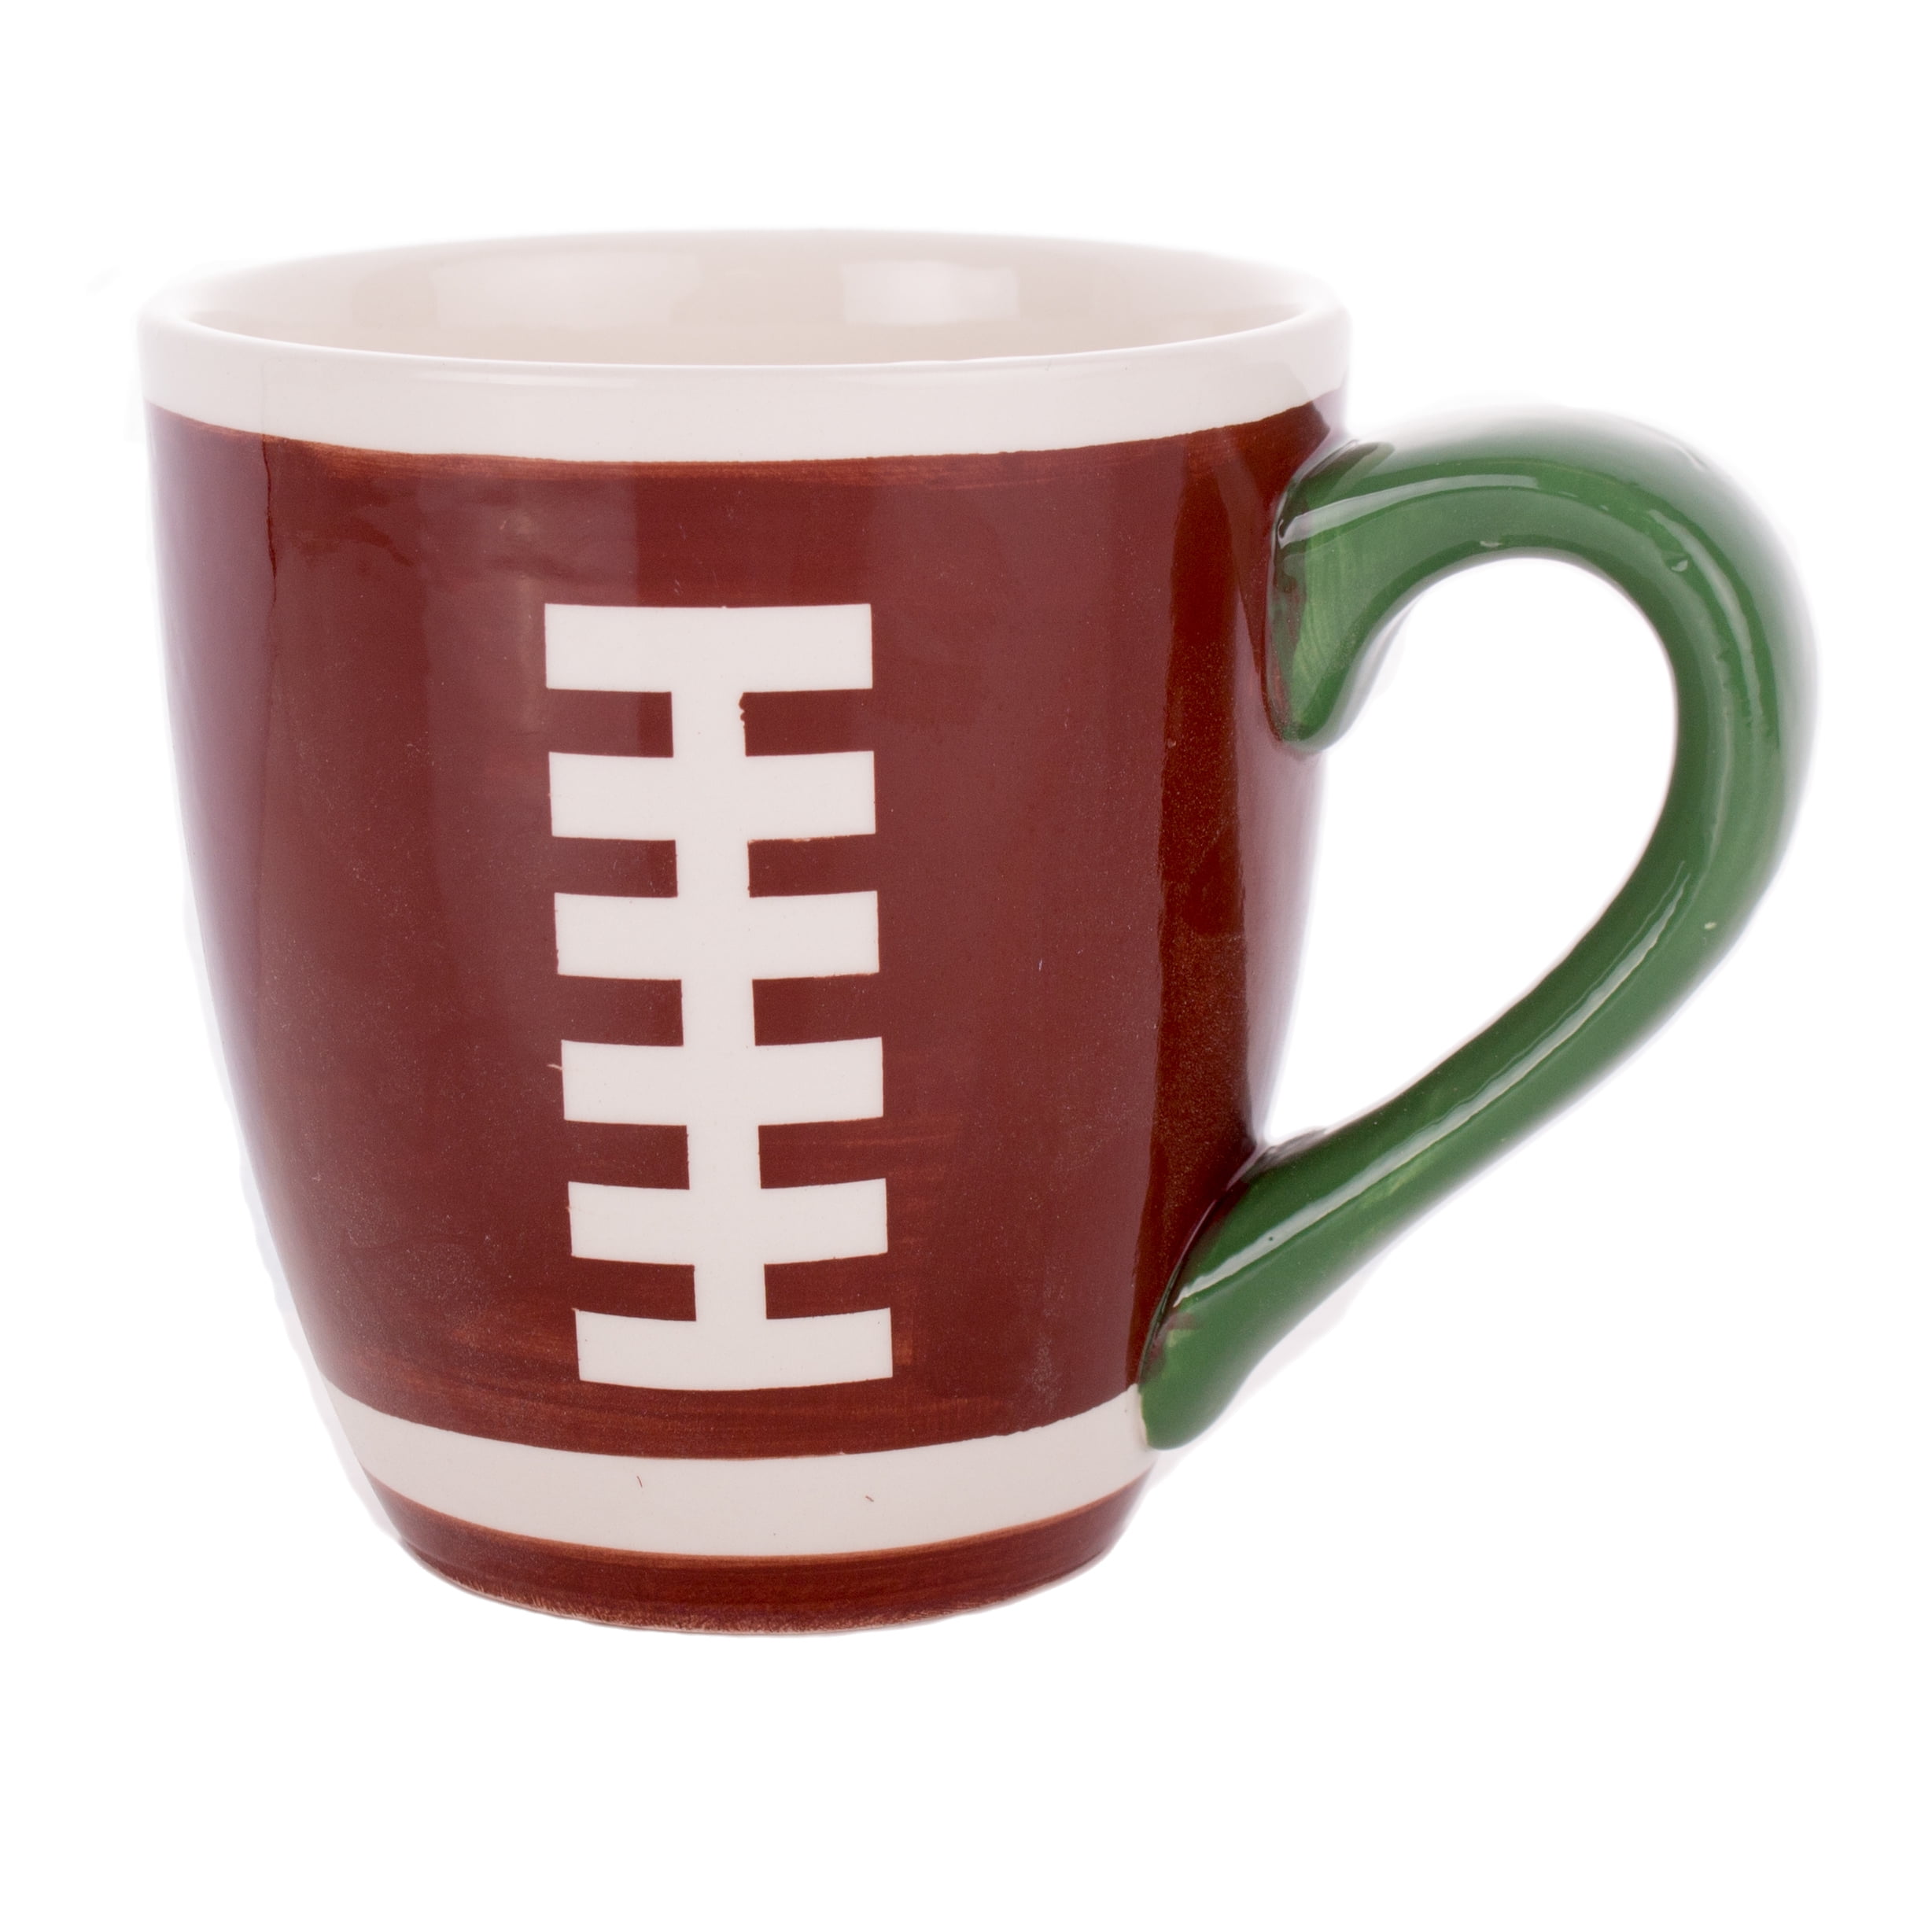 Burton & Burton Baseball 13 oz Ceramic Coffee Mug Great Gift for Sports Fans,white with red baseball pattern,13 ounce